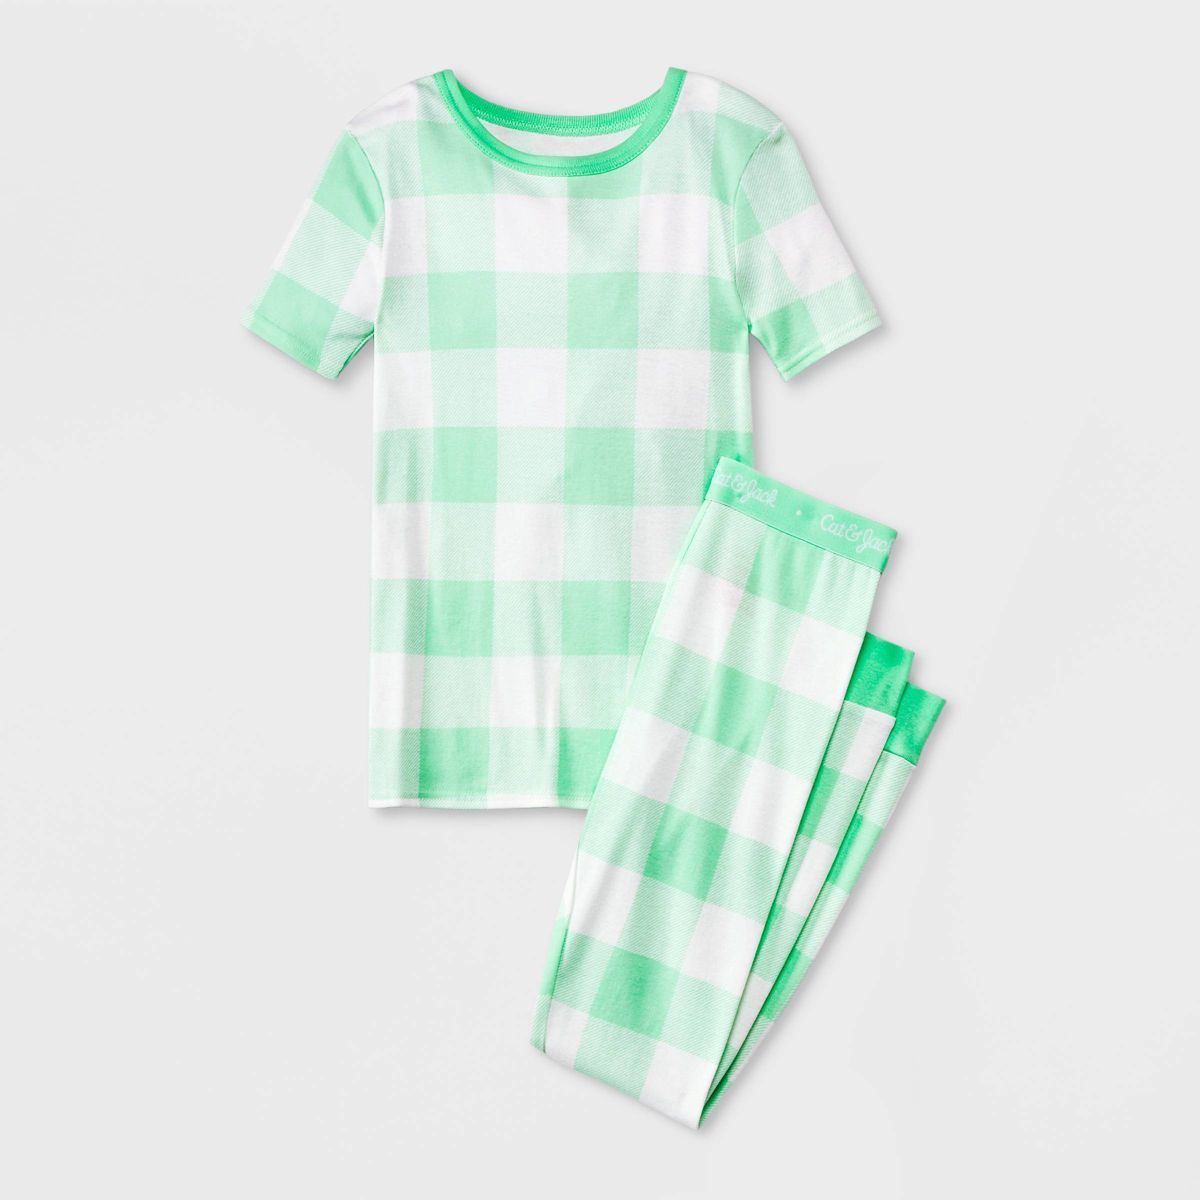 TargetClothing, Shoes & AccessoriesKids’ ClothingGirls’ ClothingPajamas & RobesPajama Sets | Target